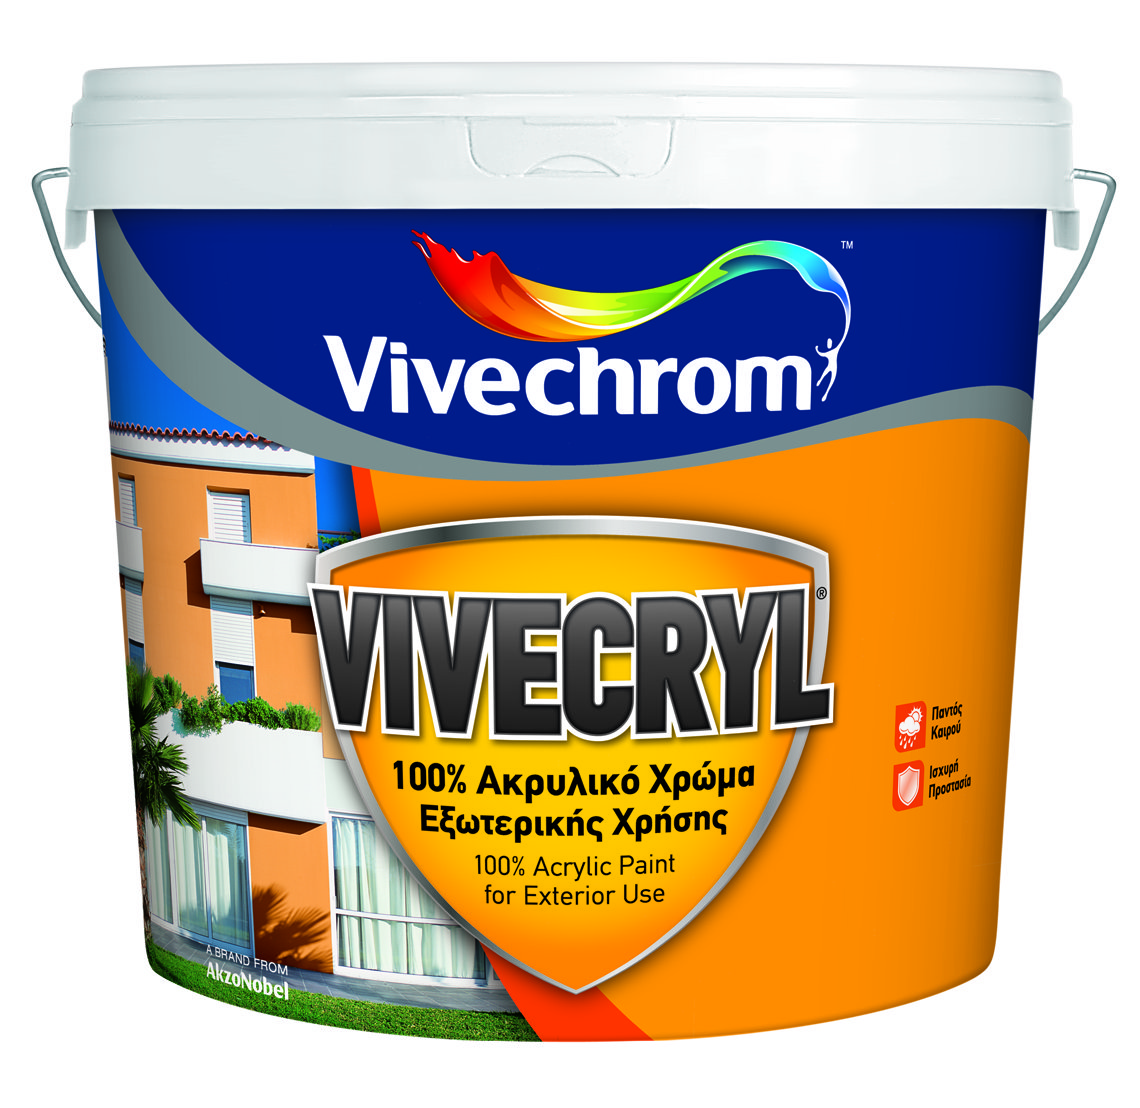 Vivechrom Vivecryl Ακρυλικό Οικολογικό Χρώμα Matt Finish Βάση TR 10L